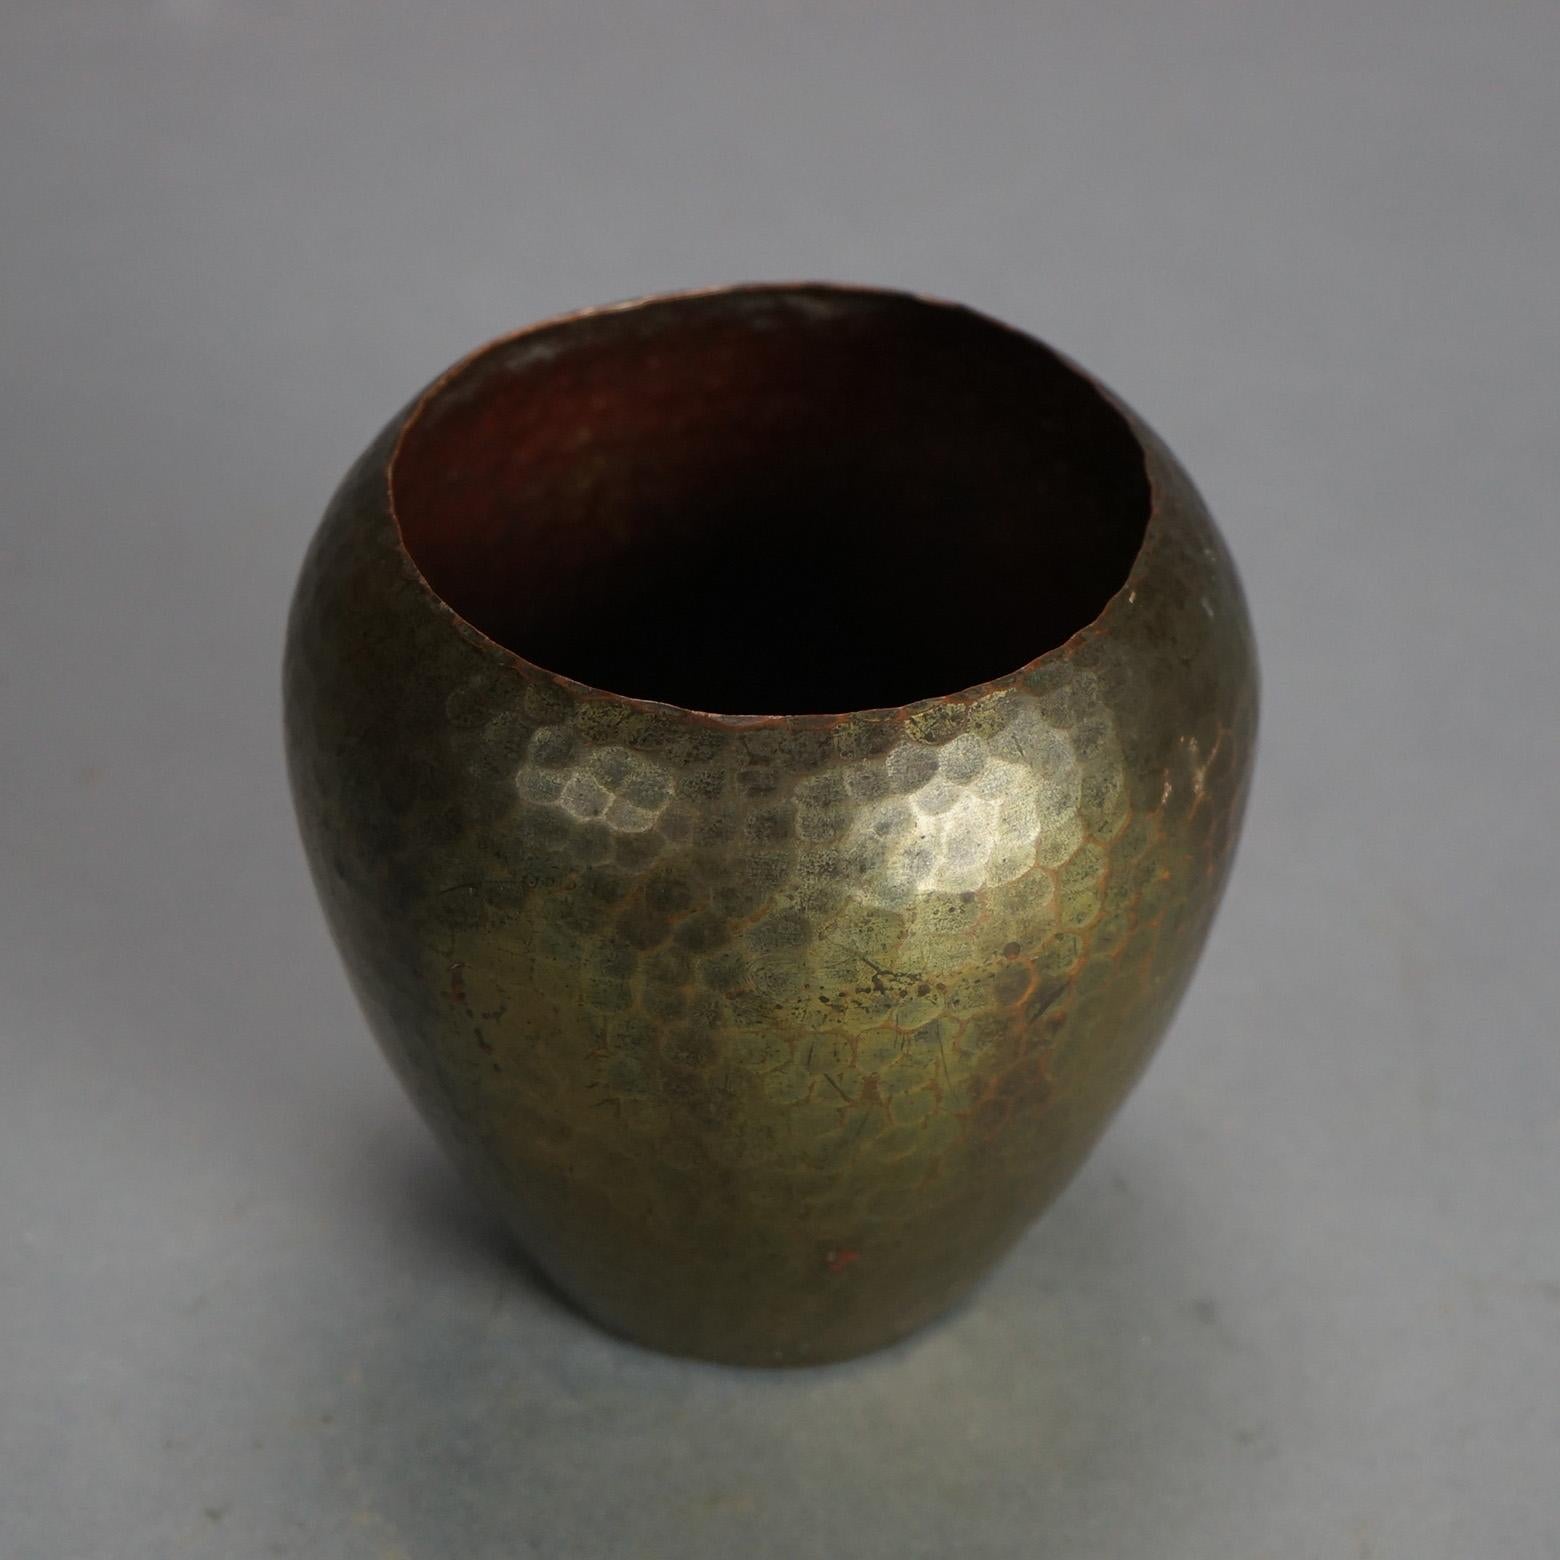 Antique Roycroft Hand Hammered Copper Arts & Crafts Vase C1910

Measures - 4.5